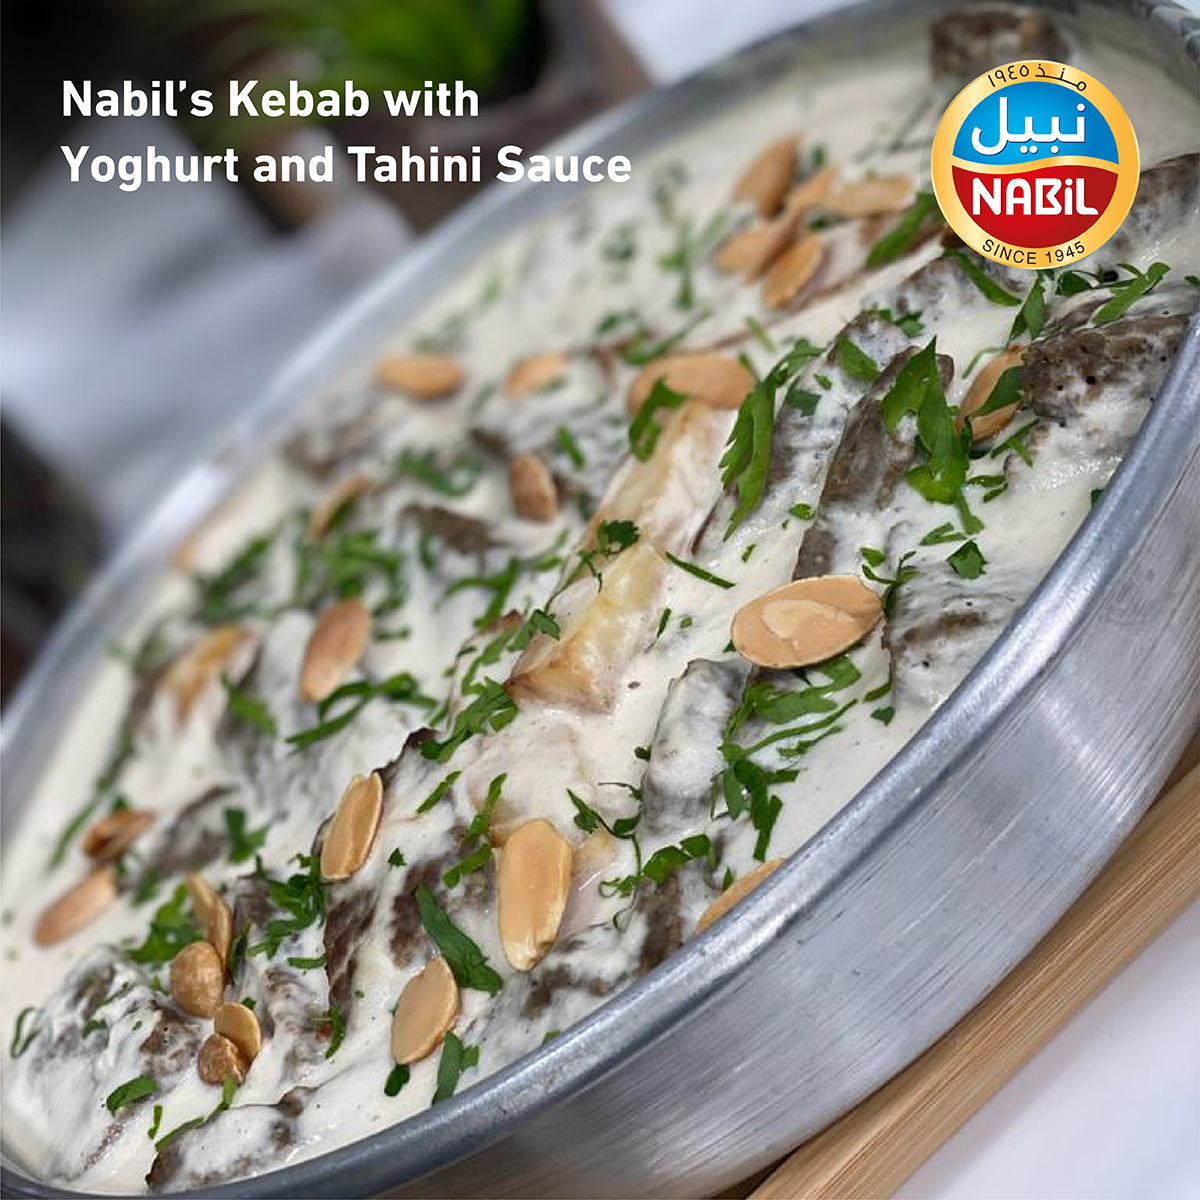 Kebab with Yoghurt and Tahini Sauce from Nabil - Nabil Foods Nabil 